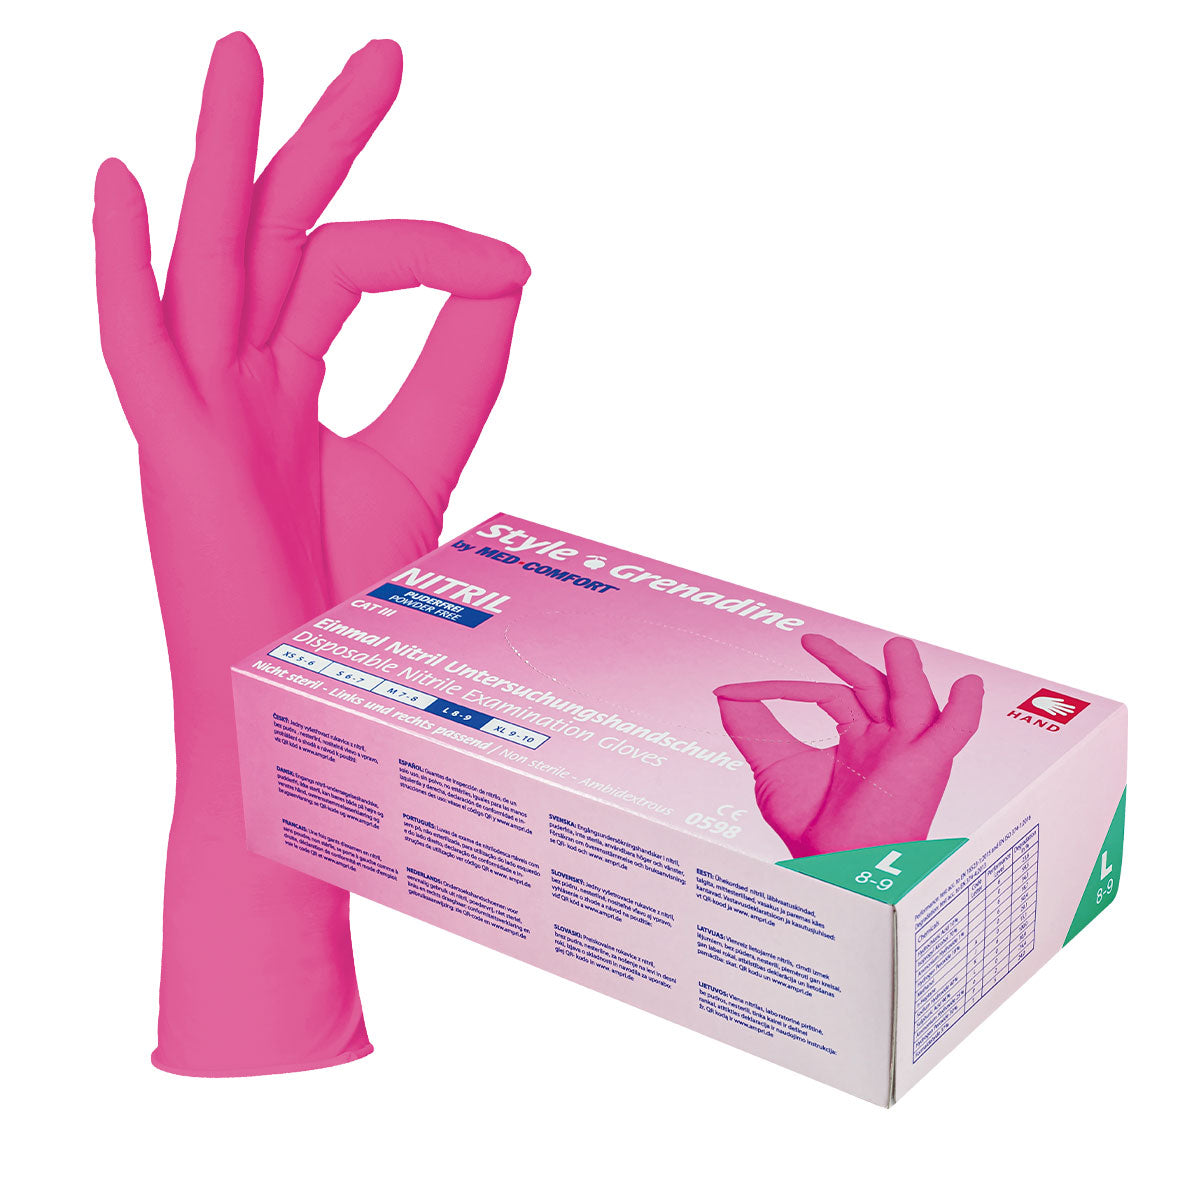 Nitrilhandschuhe Rosa Einmalhandschuh Latexfrei 100Stk Handschuh  Med-Comfort